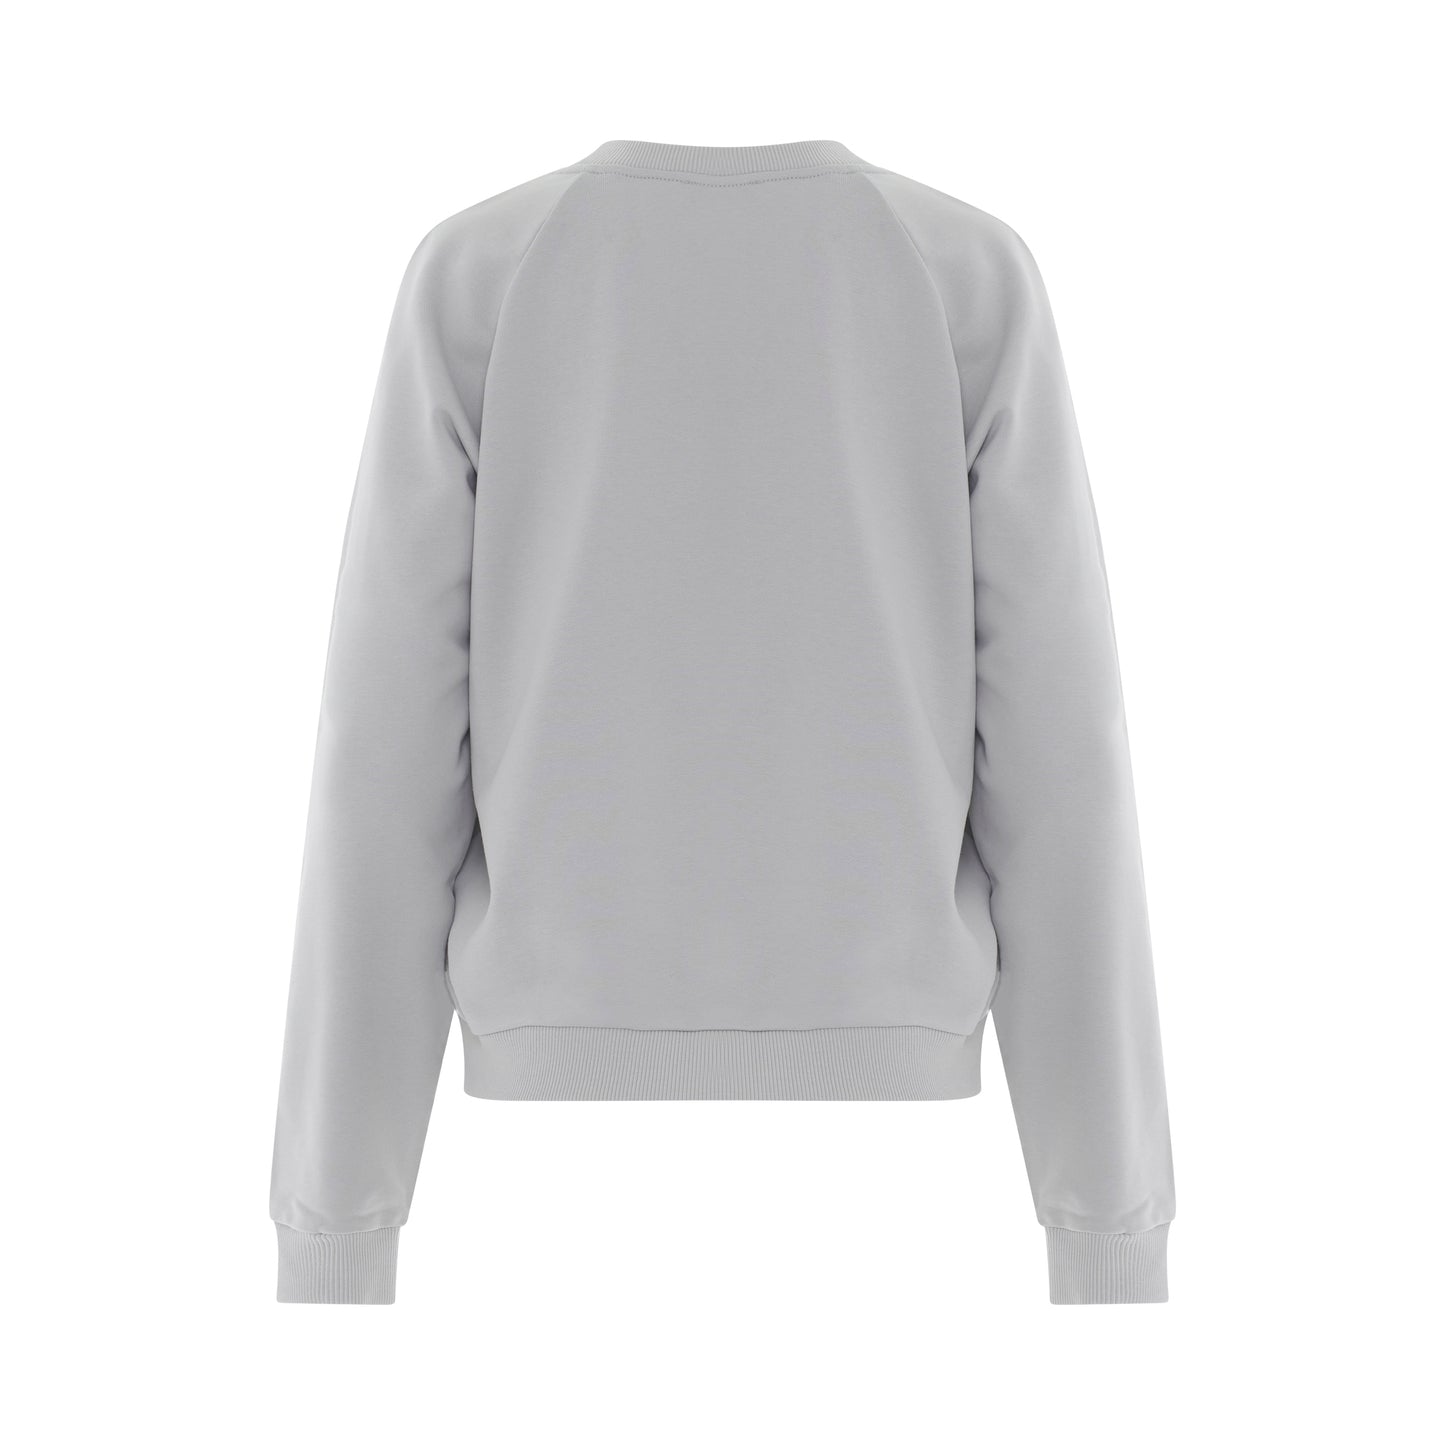 Classic Printed Long Sleeve Sweatshirt in Grey/White